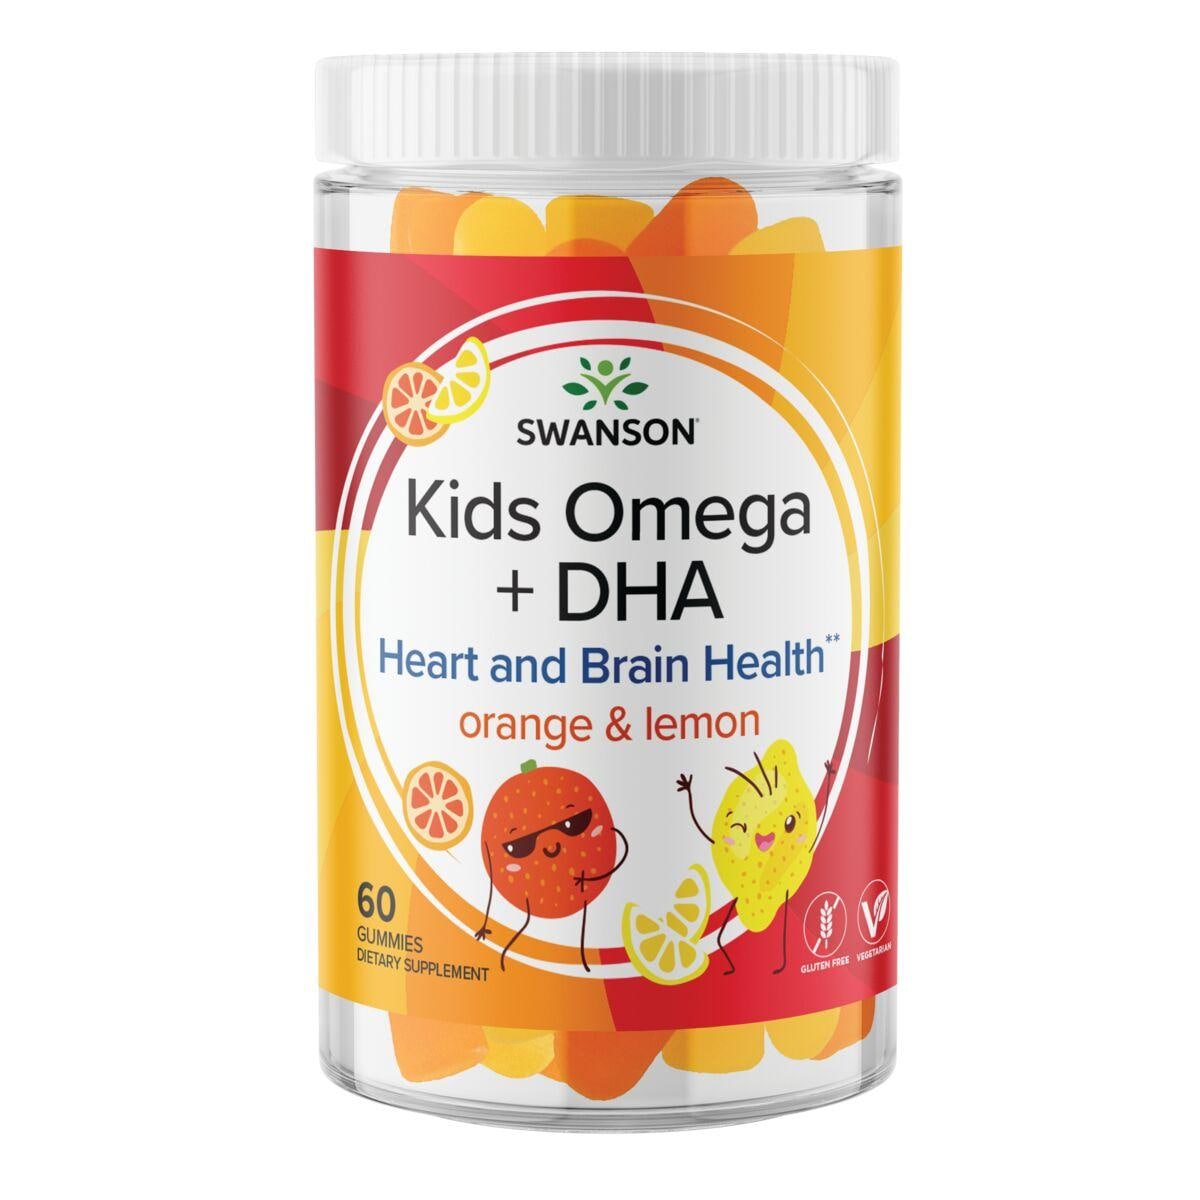 Swanson Premium Kids Omega + Dha Gummies - Orange & Lemon Supplement Vitamin 60 Gummies